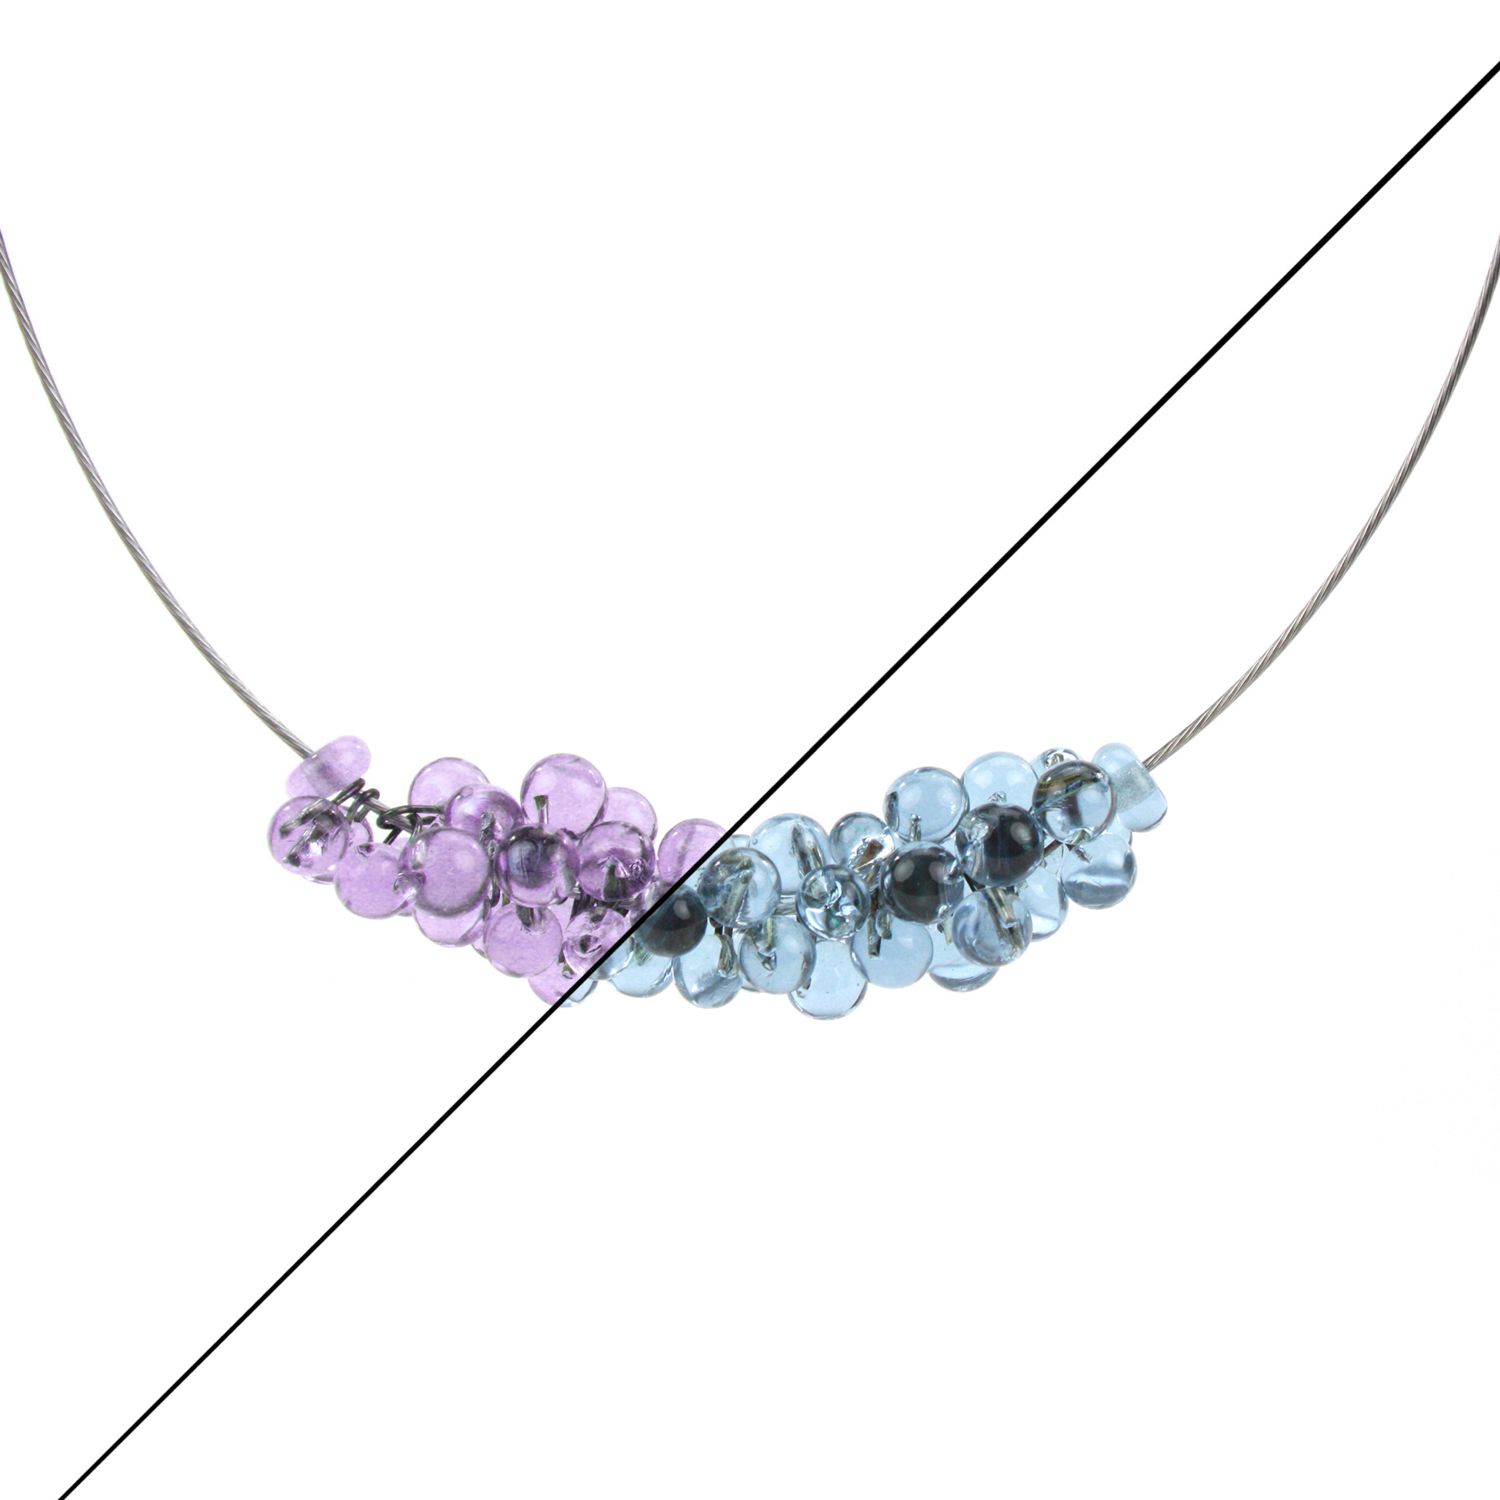 Alicia Niles: Petite Chroma Necklace – Purple/Blue Product Image 6 of 6